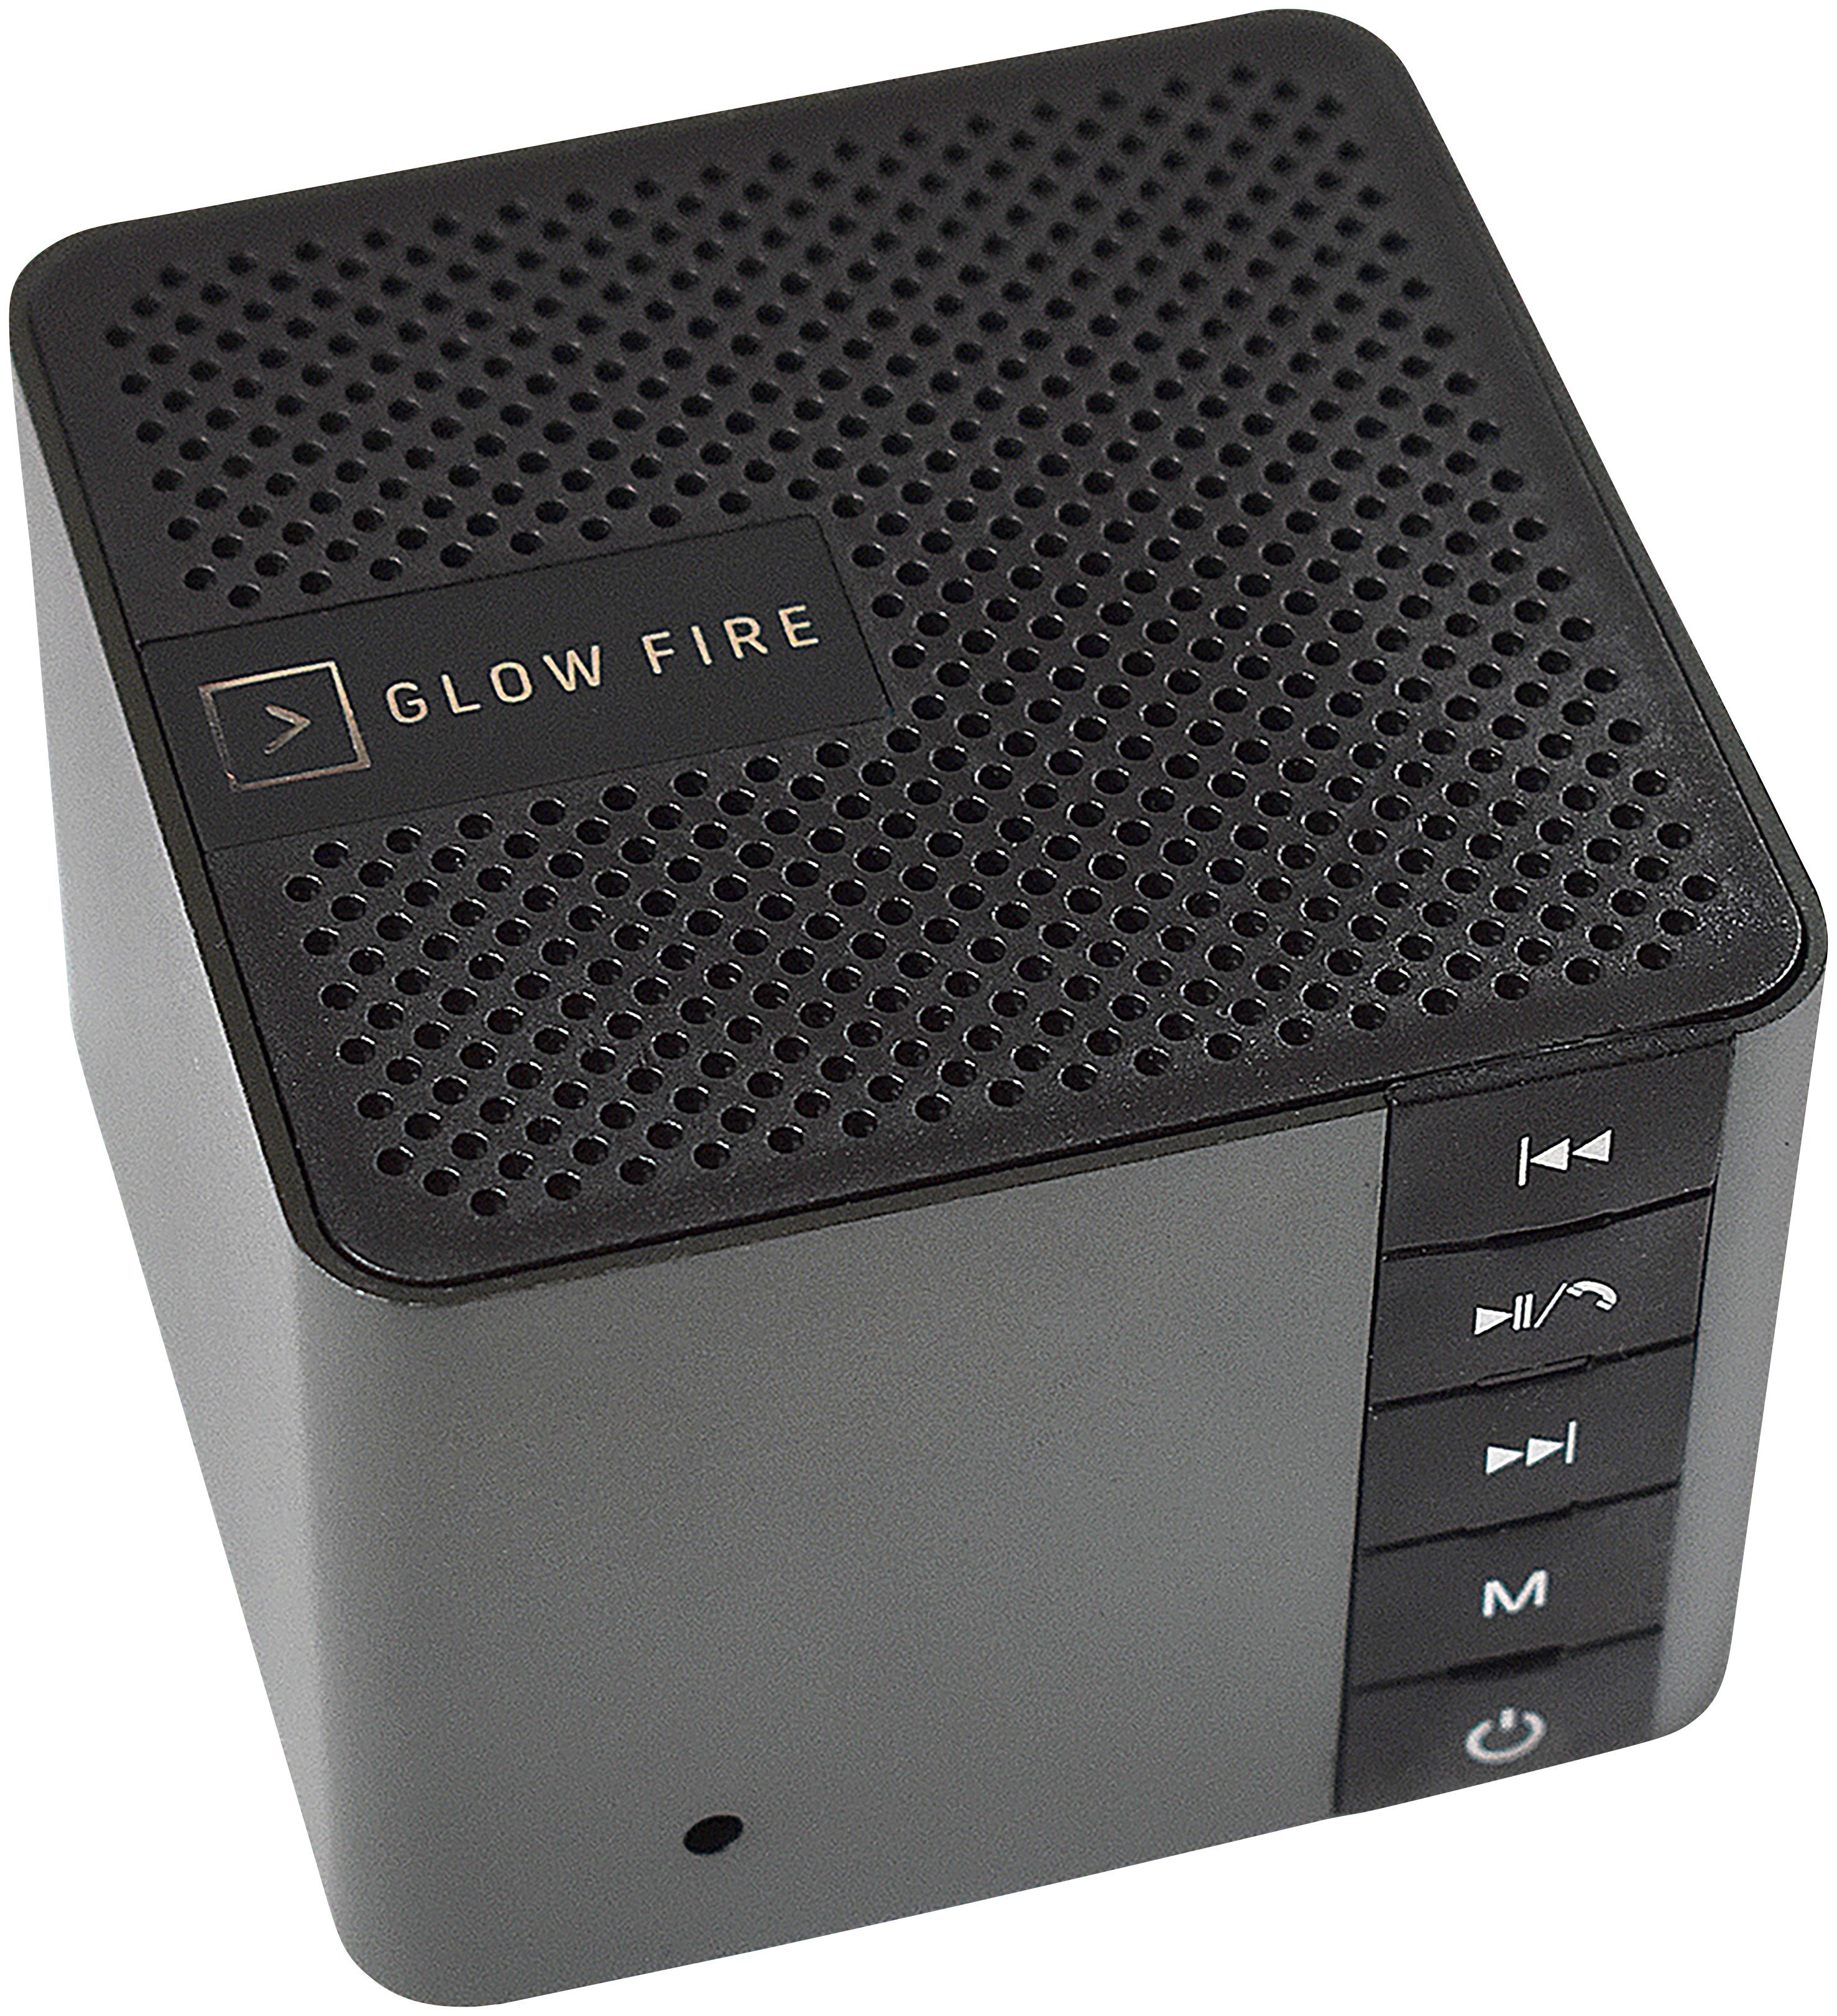 usw. (Bluetooth, für GB) Knistereffekt E-Kamin FIRE Bluetooth-Lautsprecher Karte 4 mit SD Ethanolkamin, Soundbox GLOW